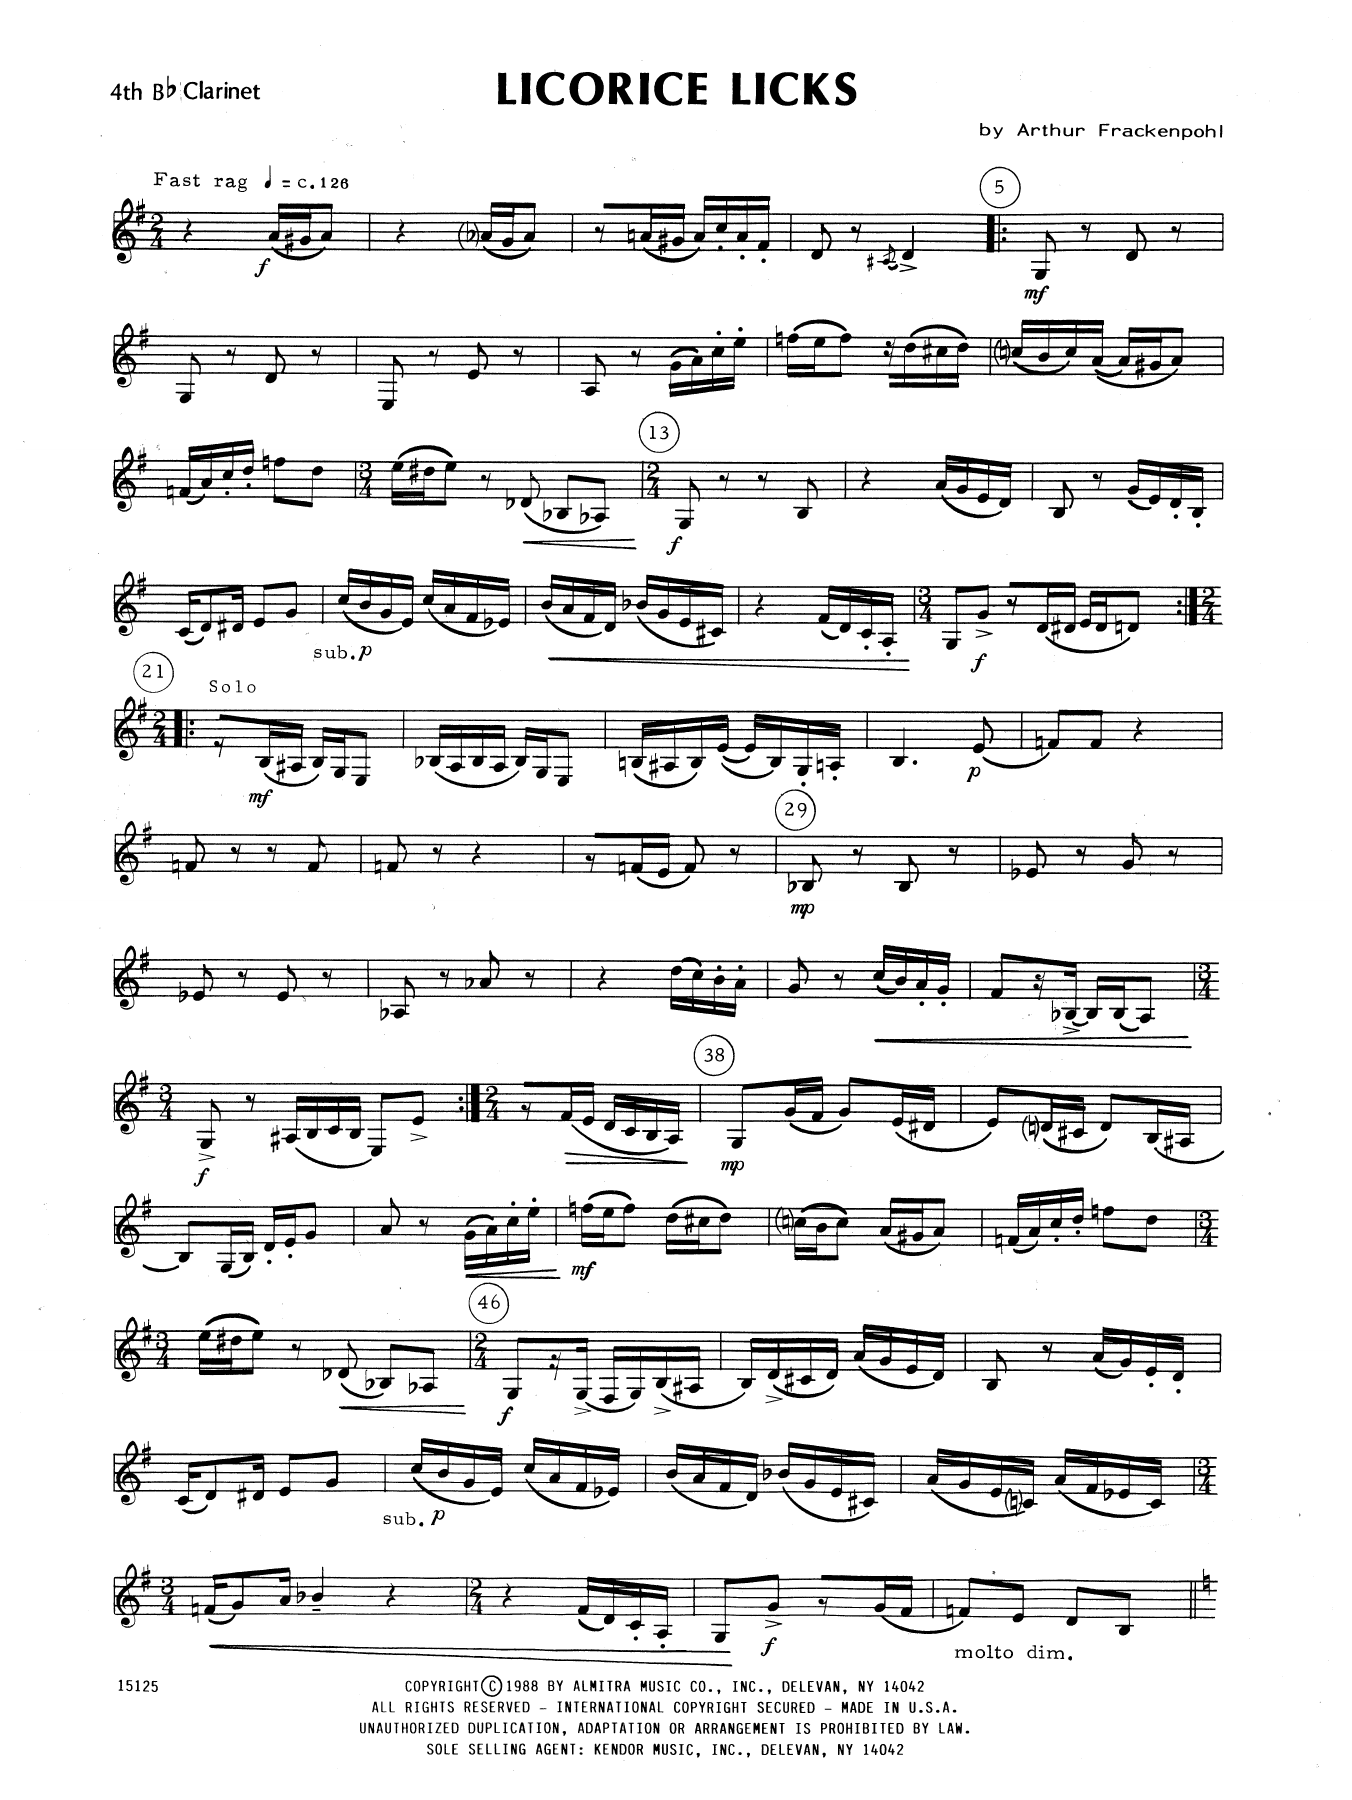 Download Arthur Frackenpohl Licorice Licks - 4th Bb Clarinet Sheet Music